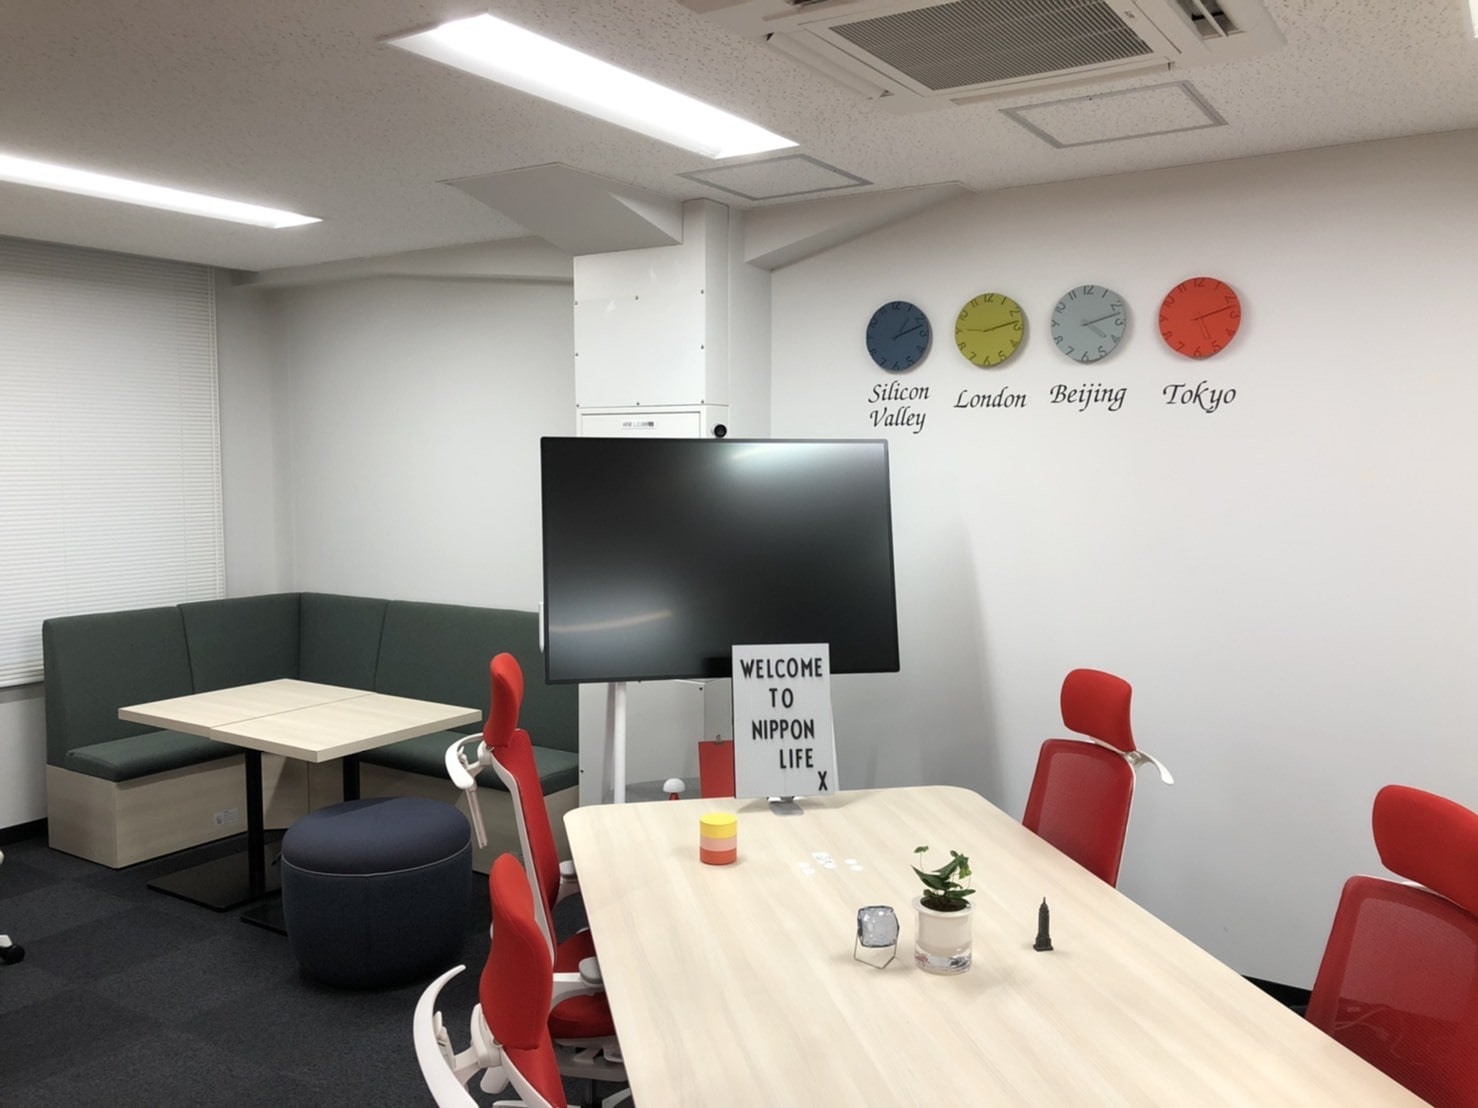 Nippon Life Xの新オフィス「FINOLAB」